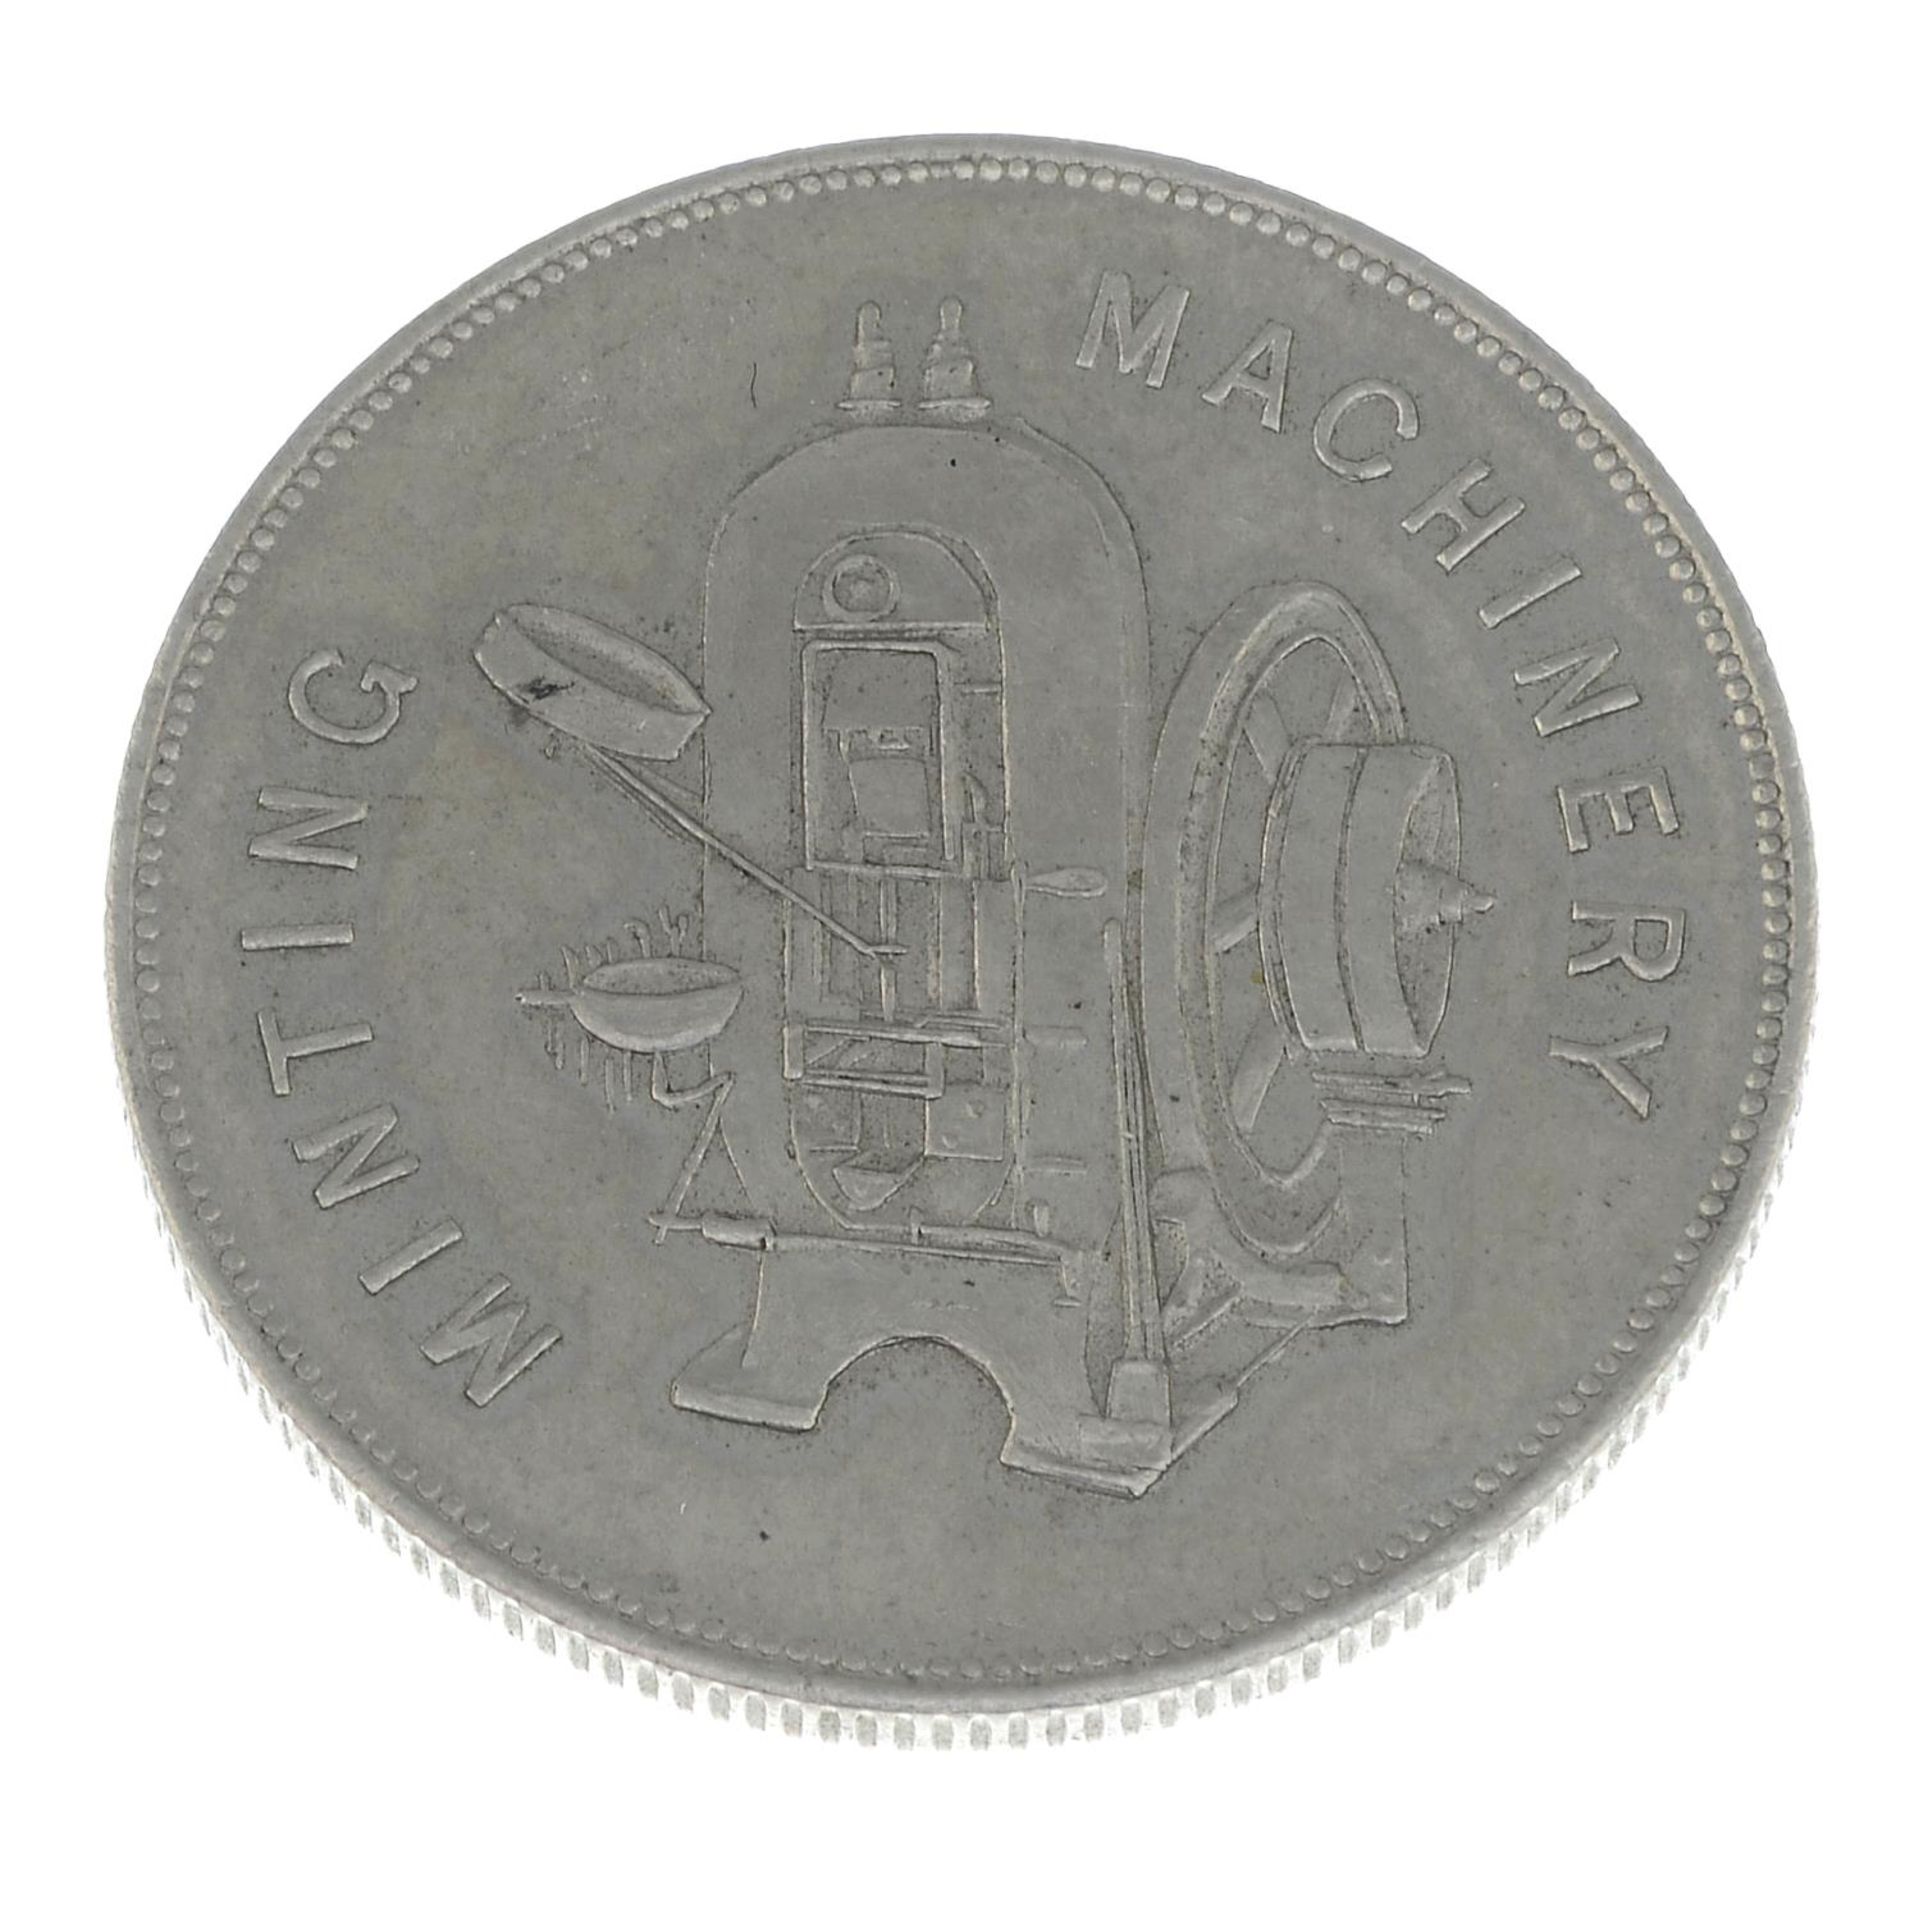 Birmingham, Taylor & Challen Ltd, cupro-nickel advertising token dated 1814, coining press, rev.